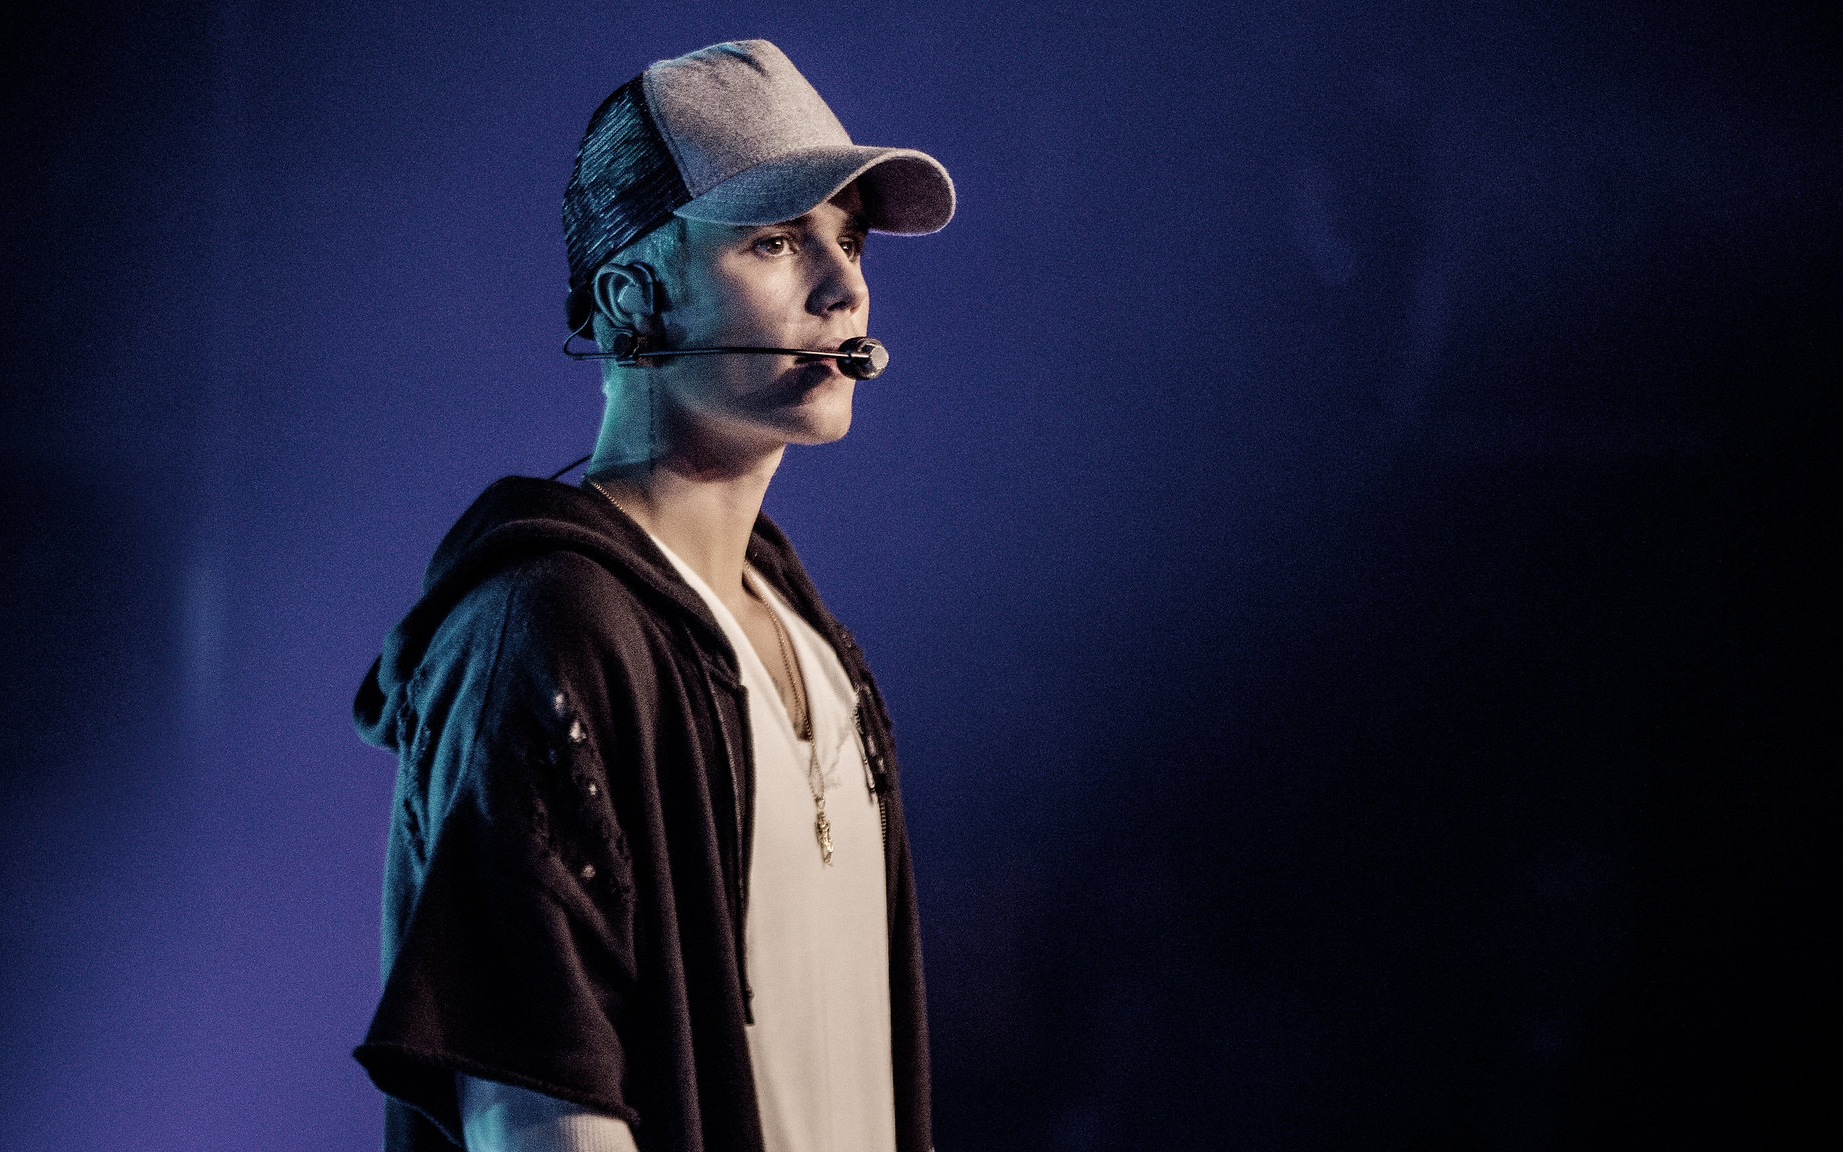 Justin Bieber wearing headset performing on stage